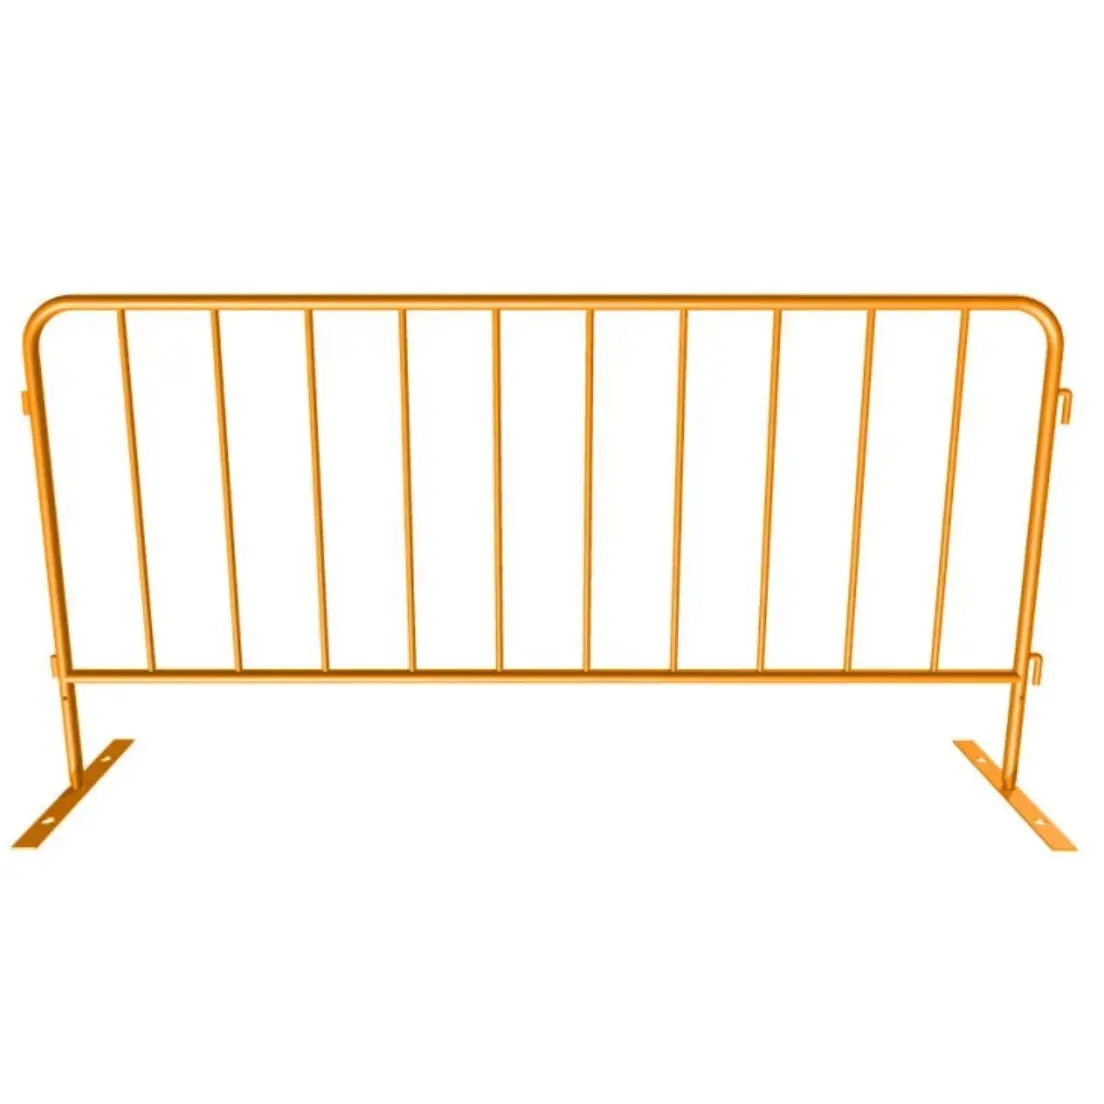 Barel tabrakan baja galvanis rakitan mudah dilepas barikade kontrol kerumunan jalan untuk pagar sementara